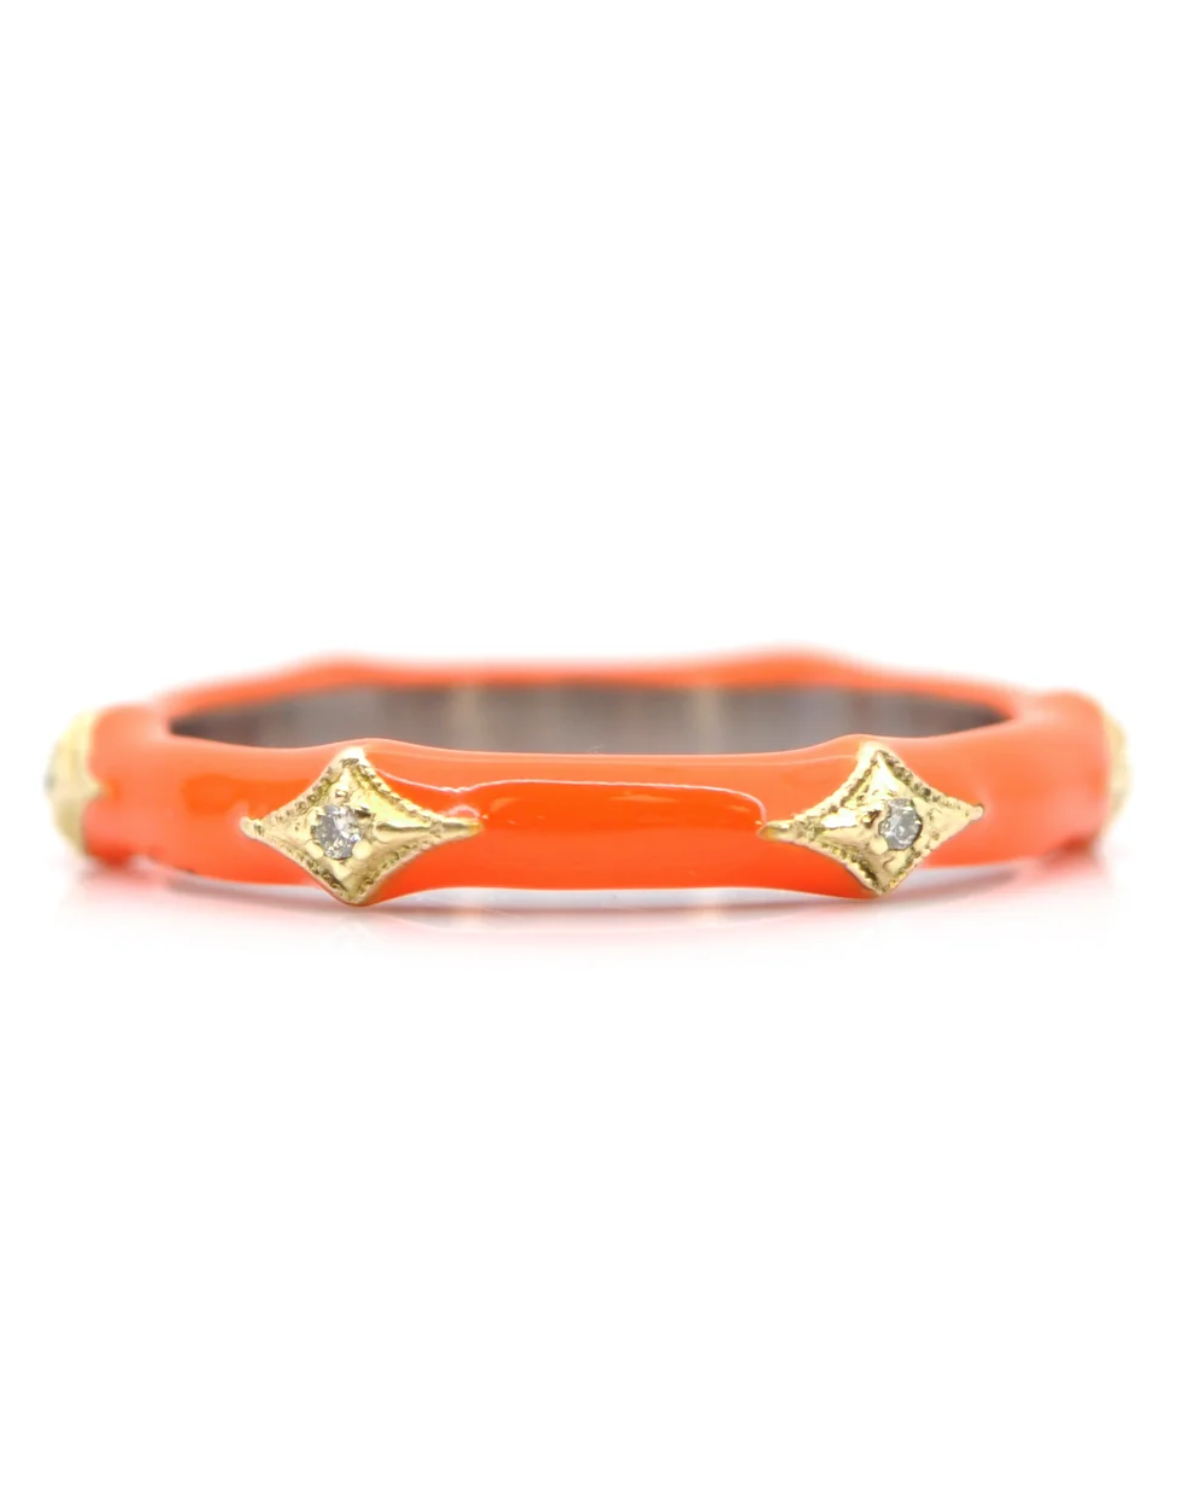 Orange Enamel Ring Size 6.5 (18k)